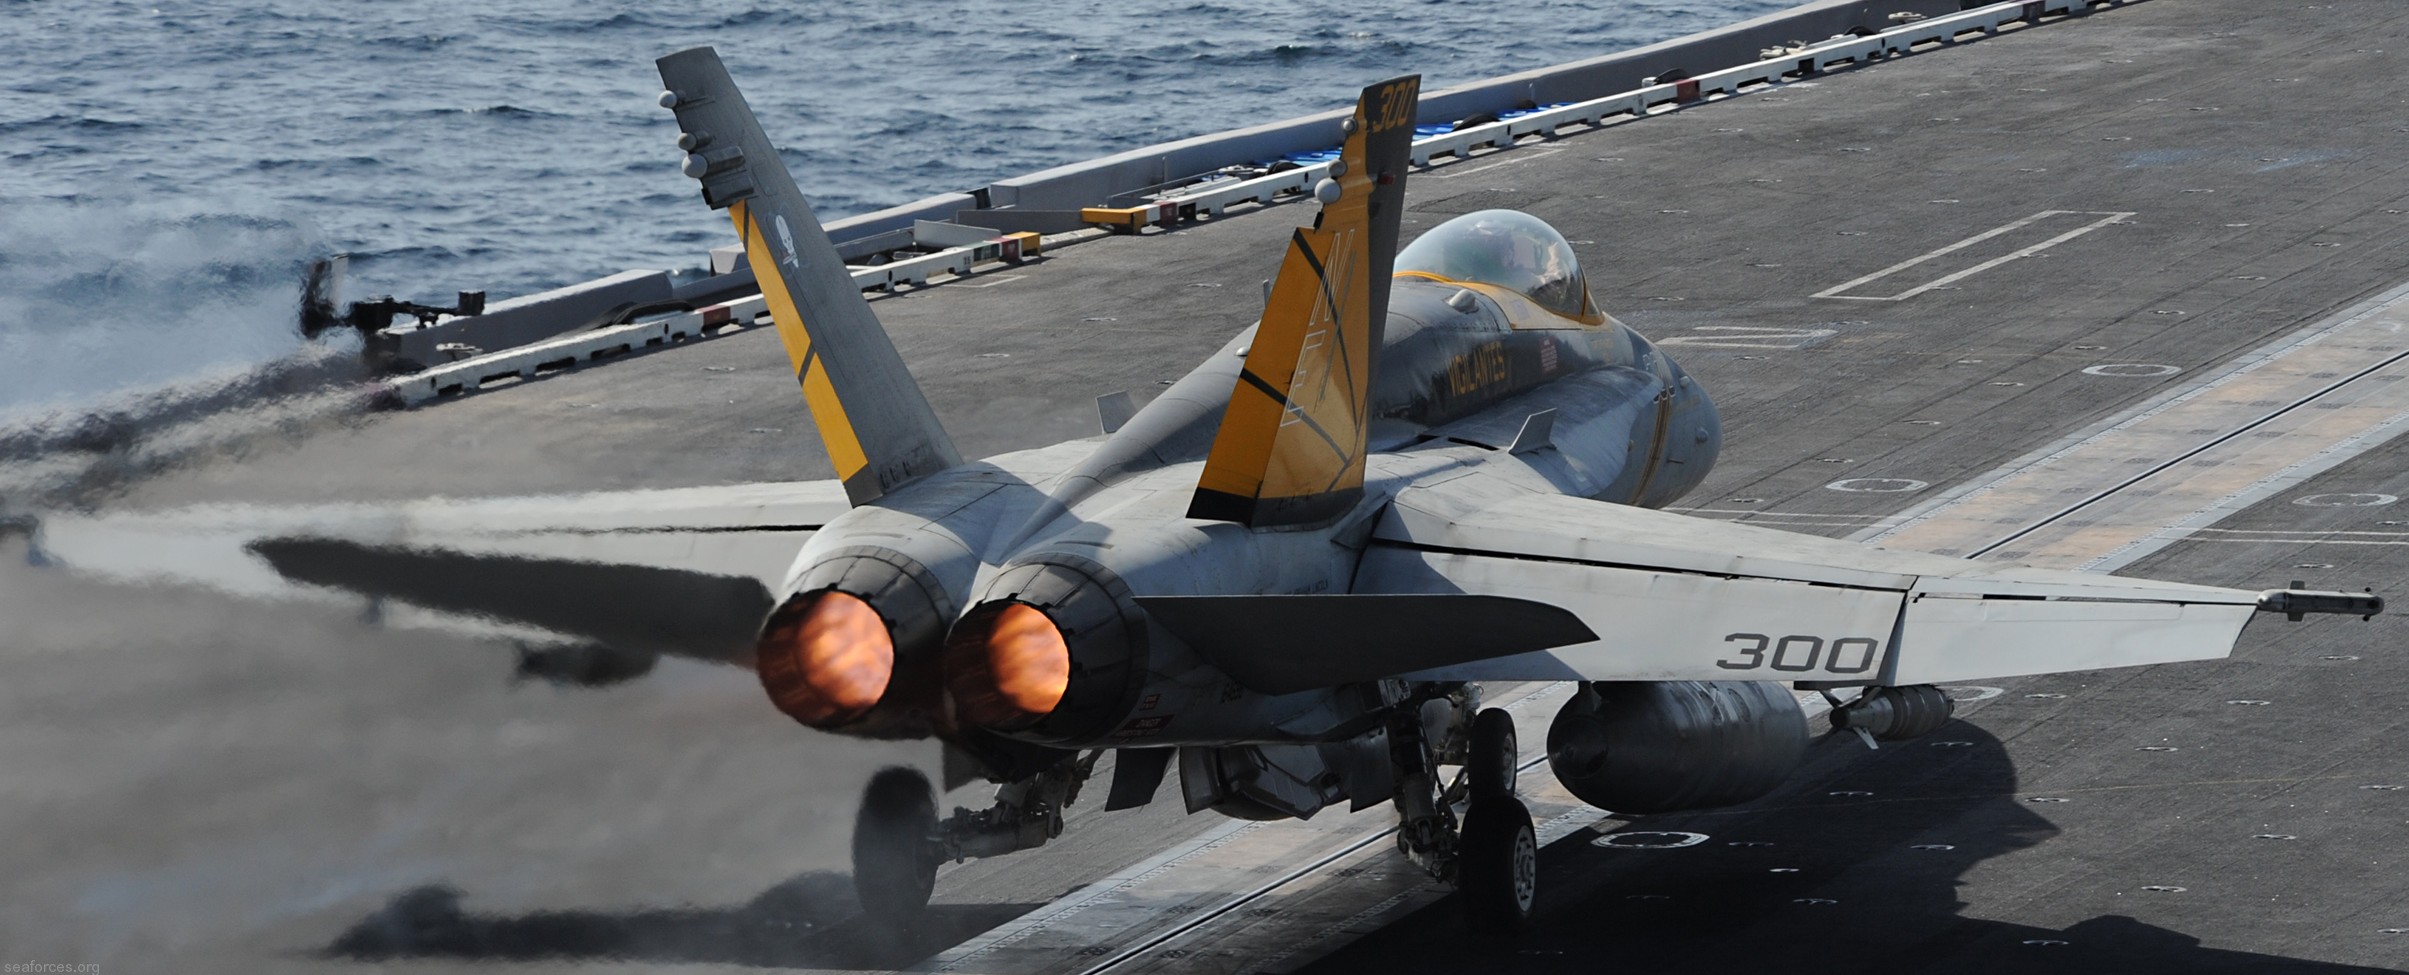 vfa-151 vigilantes strike fighter squadron navy f/a-18c hornet carrier air wing cvw-2 uss abraham lincoln cvn-72 42